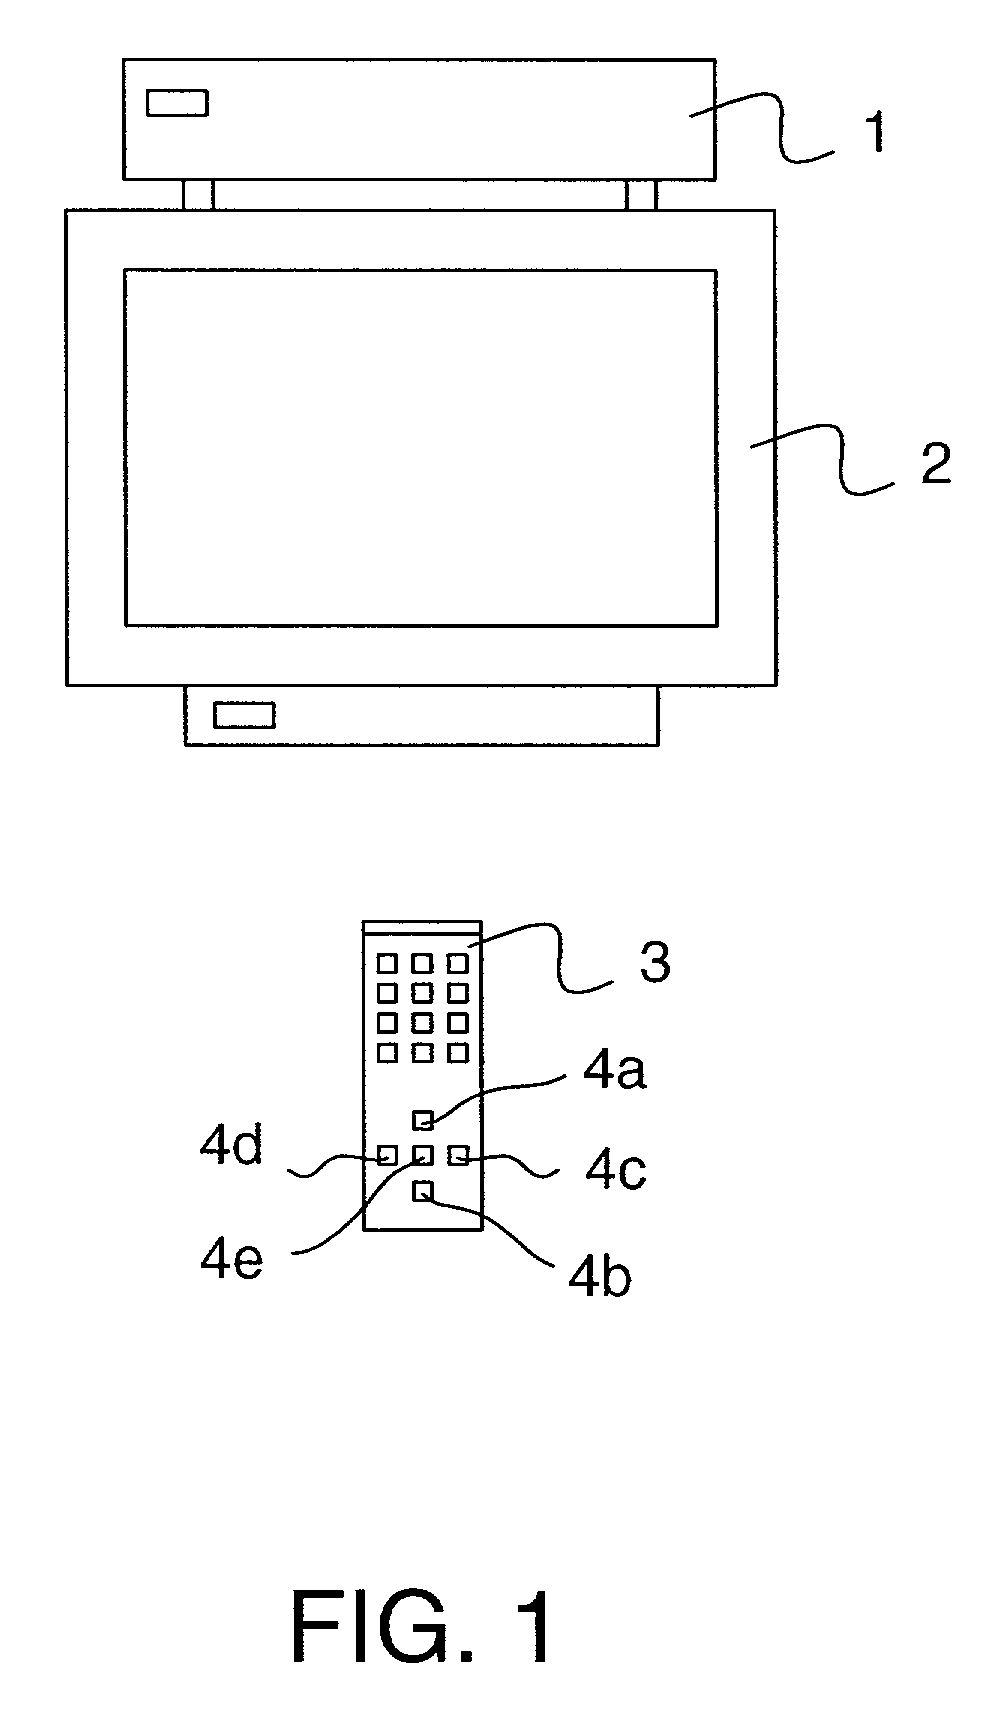 Display generating device